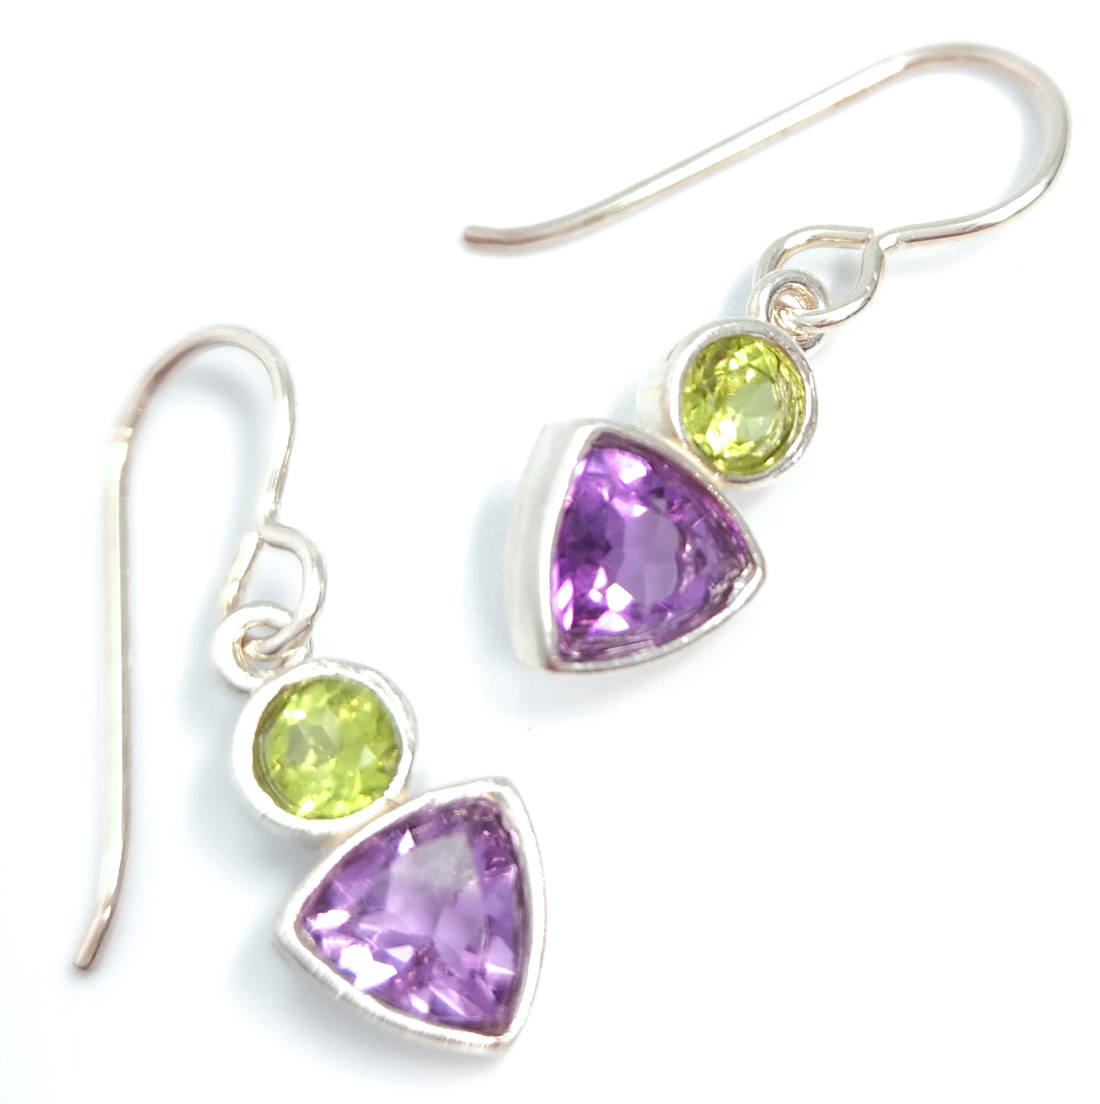 green peridot and purple amethyst earrings handmade by Sonoma Art Works